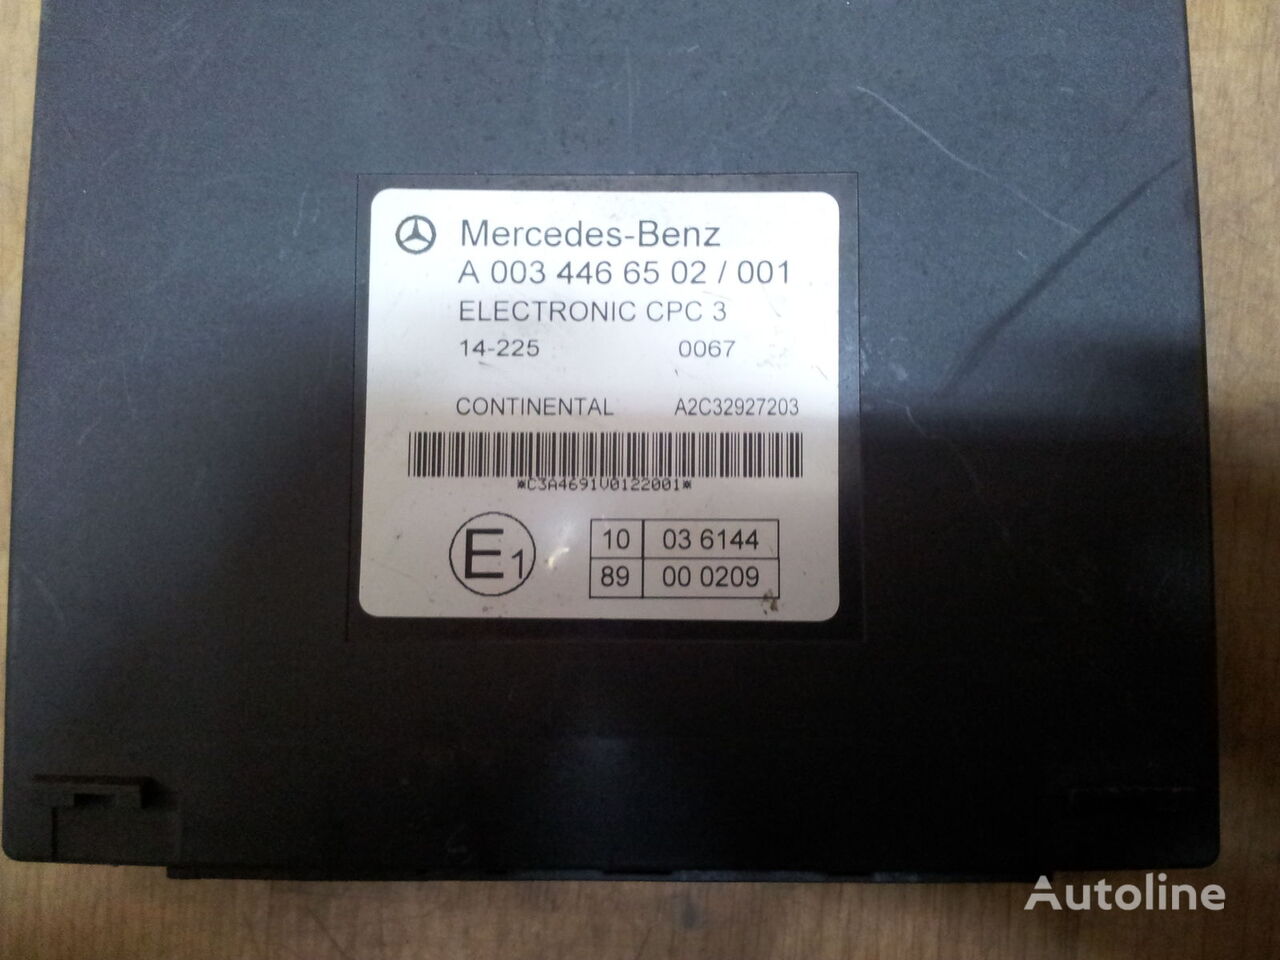 Mercedes-Benz Actros, ELECTRONIC CPC 3, EURO6, CPC Drive control electronics,  Steuereinheit für Mercedes-Benz Actros MP4 Sattelzugmaschine